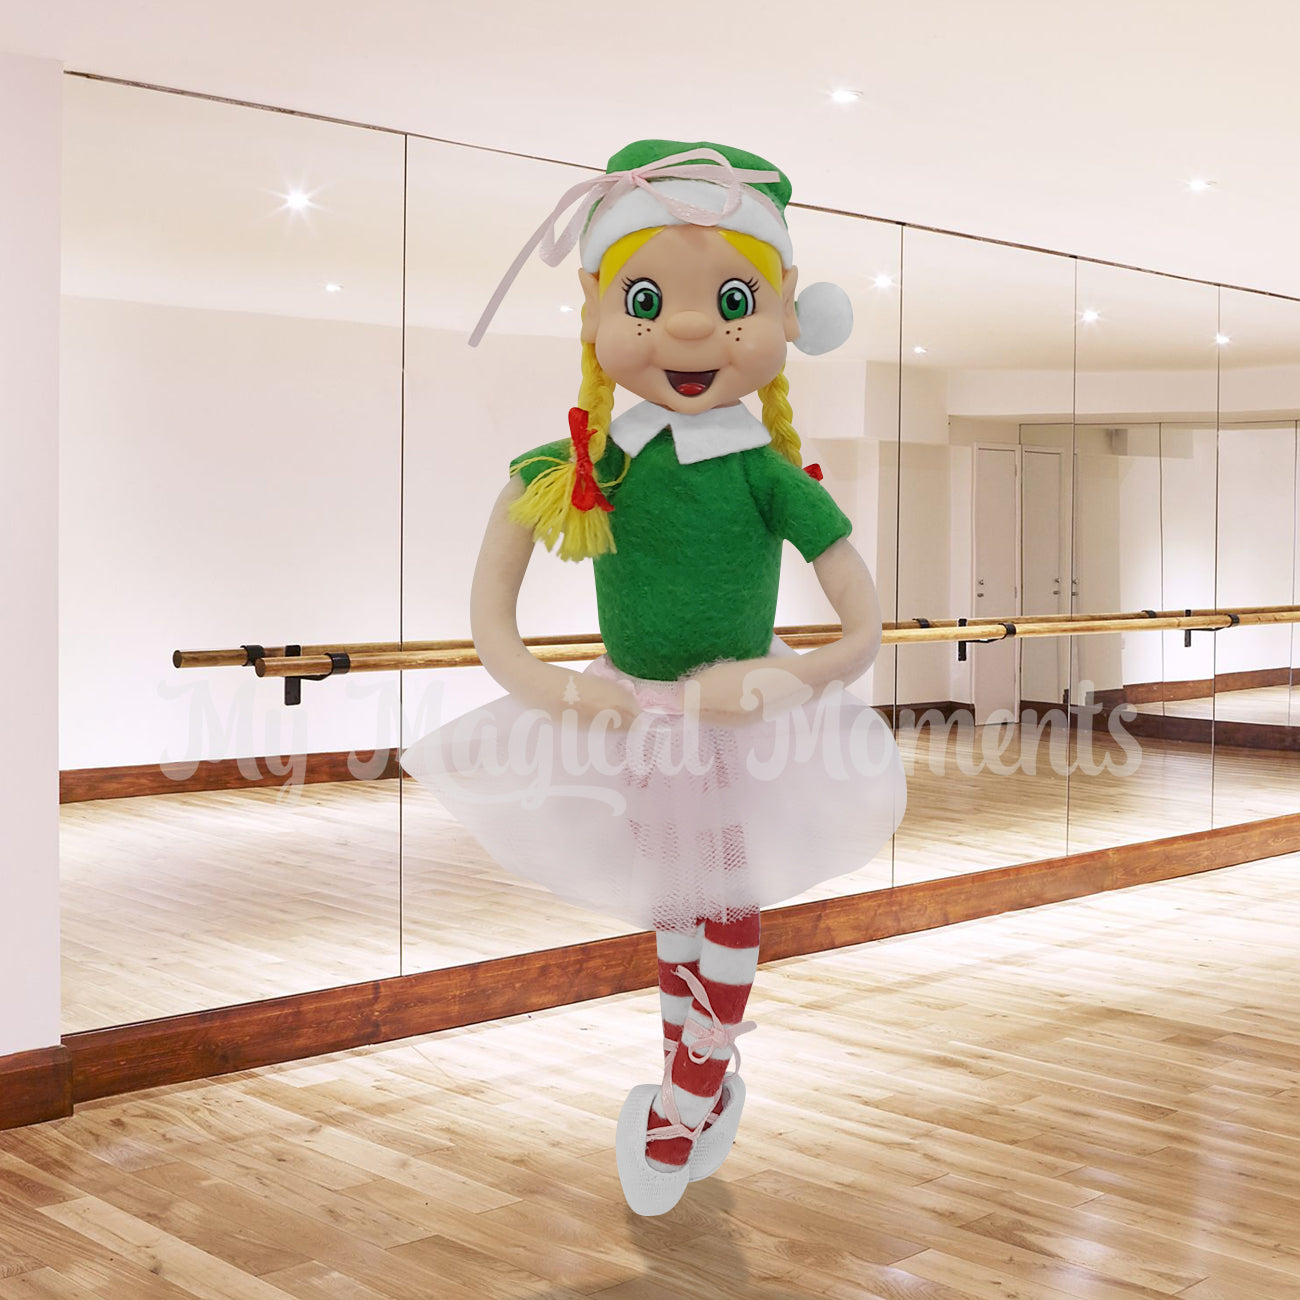 Elf wearing ballet shoes posing in a dance studio